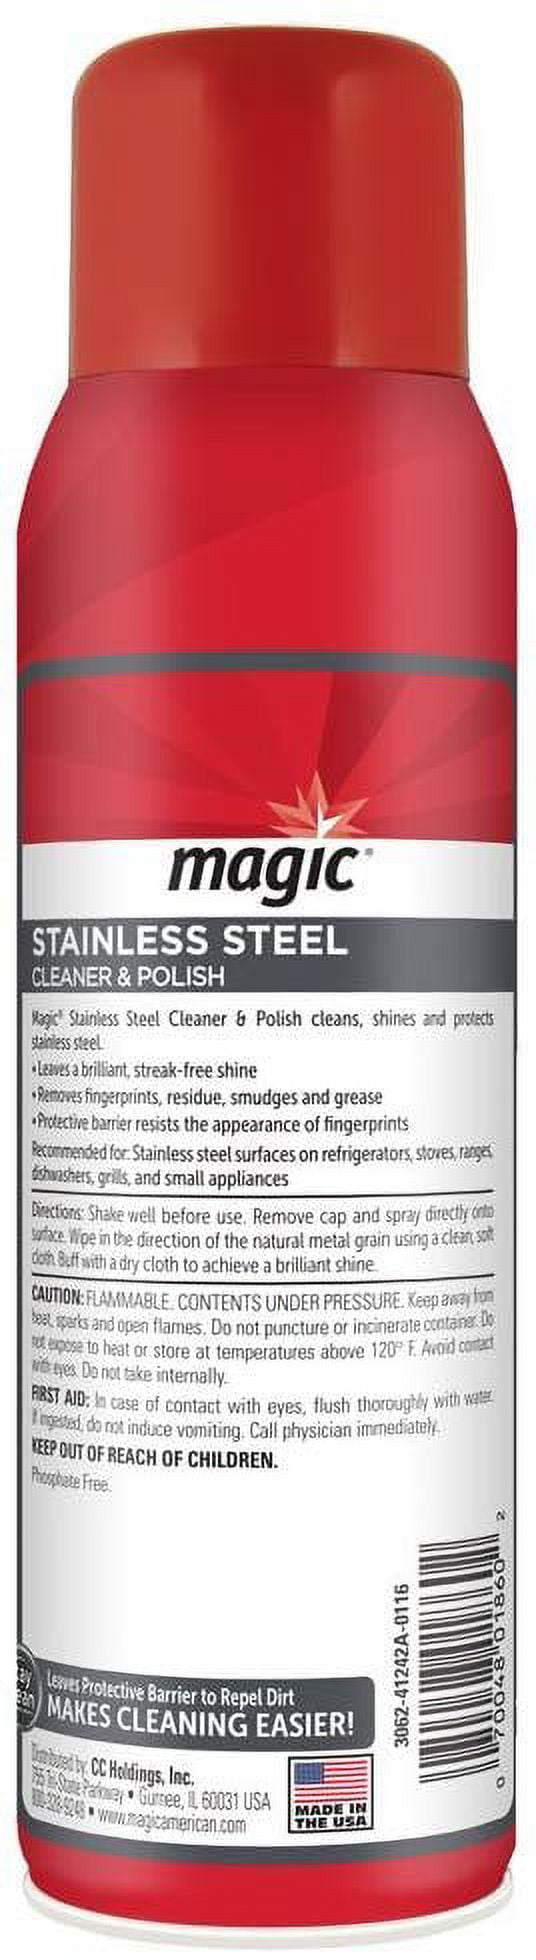 2-Pk) Magic® STAINLESS STEEL Range Appliance POLISH & CLEANER Shine Protect